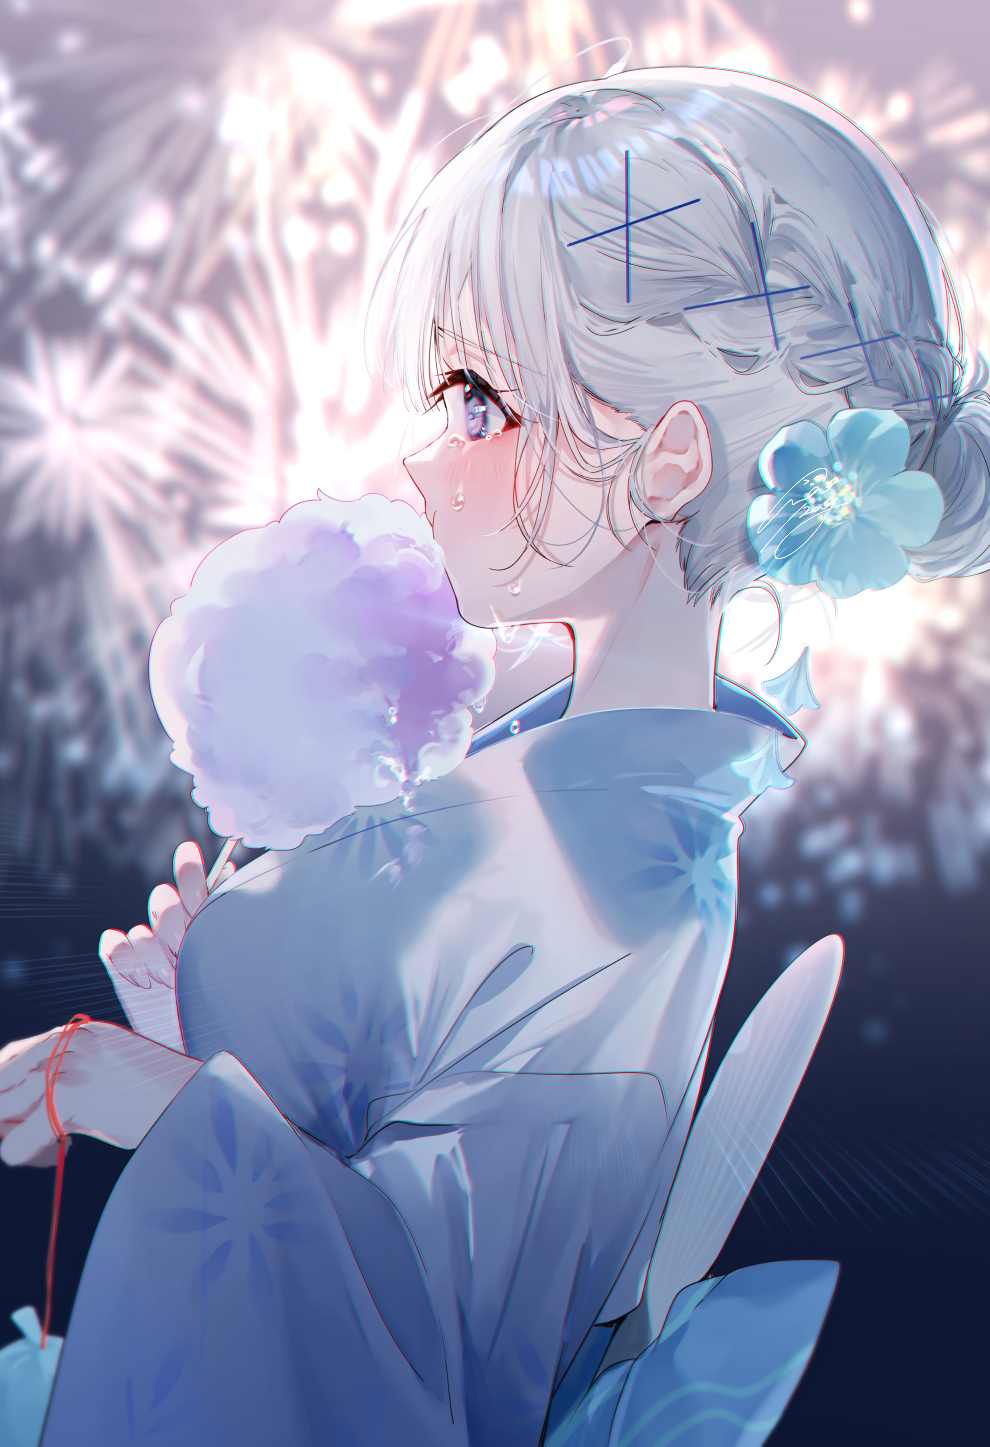 Anime Anime Girls Fireworks Profile Portrait Display Braids Flower In Hair Kimono Cotton Candy Sweet 990x1447